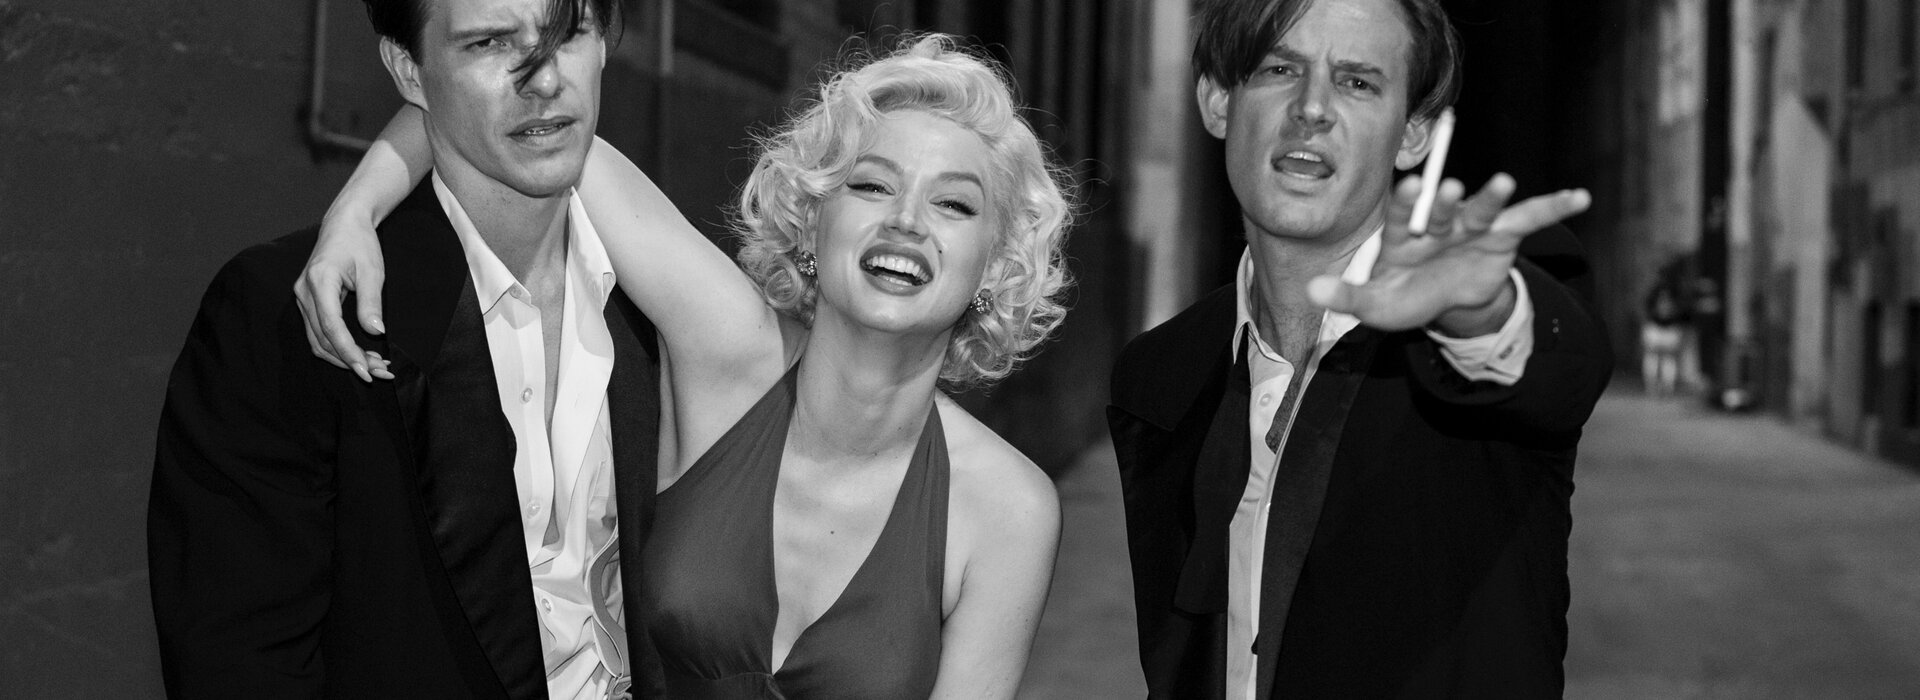 STREAMO Weekly: Ana de Armas als Marilyn Monroe in "Blond" | © Netflix